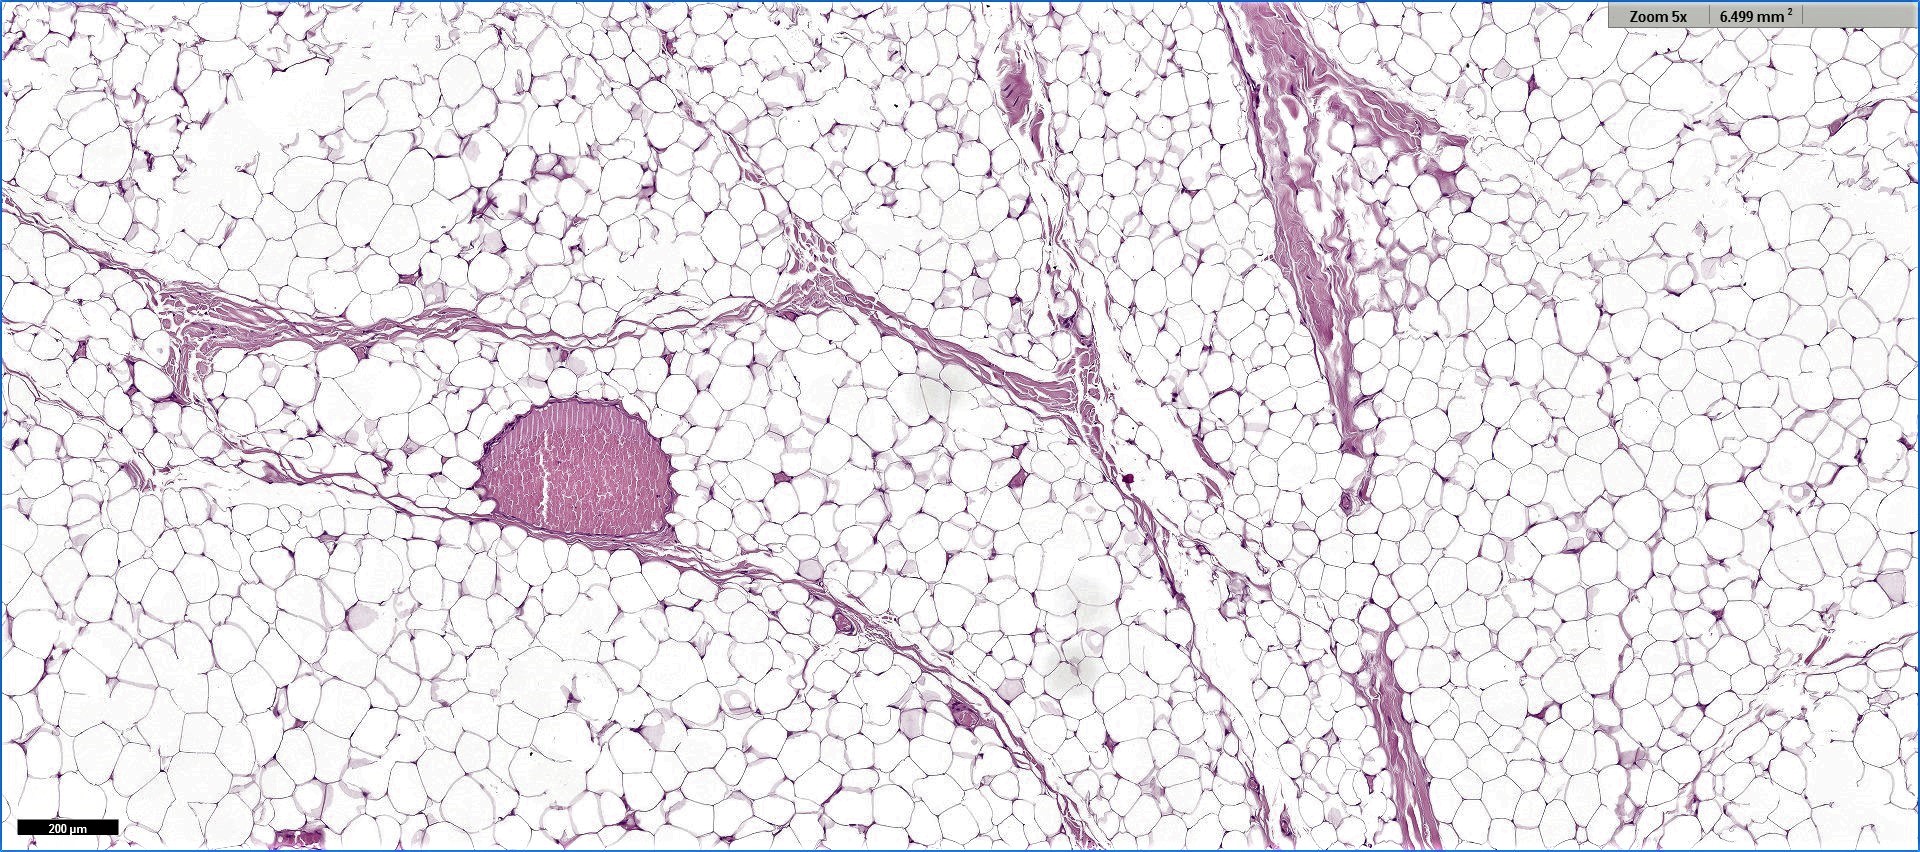 Paucicellular fibrous septa